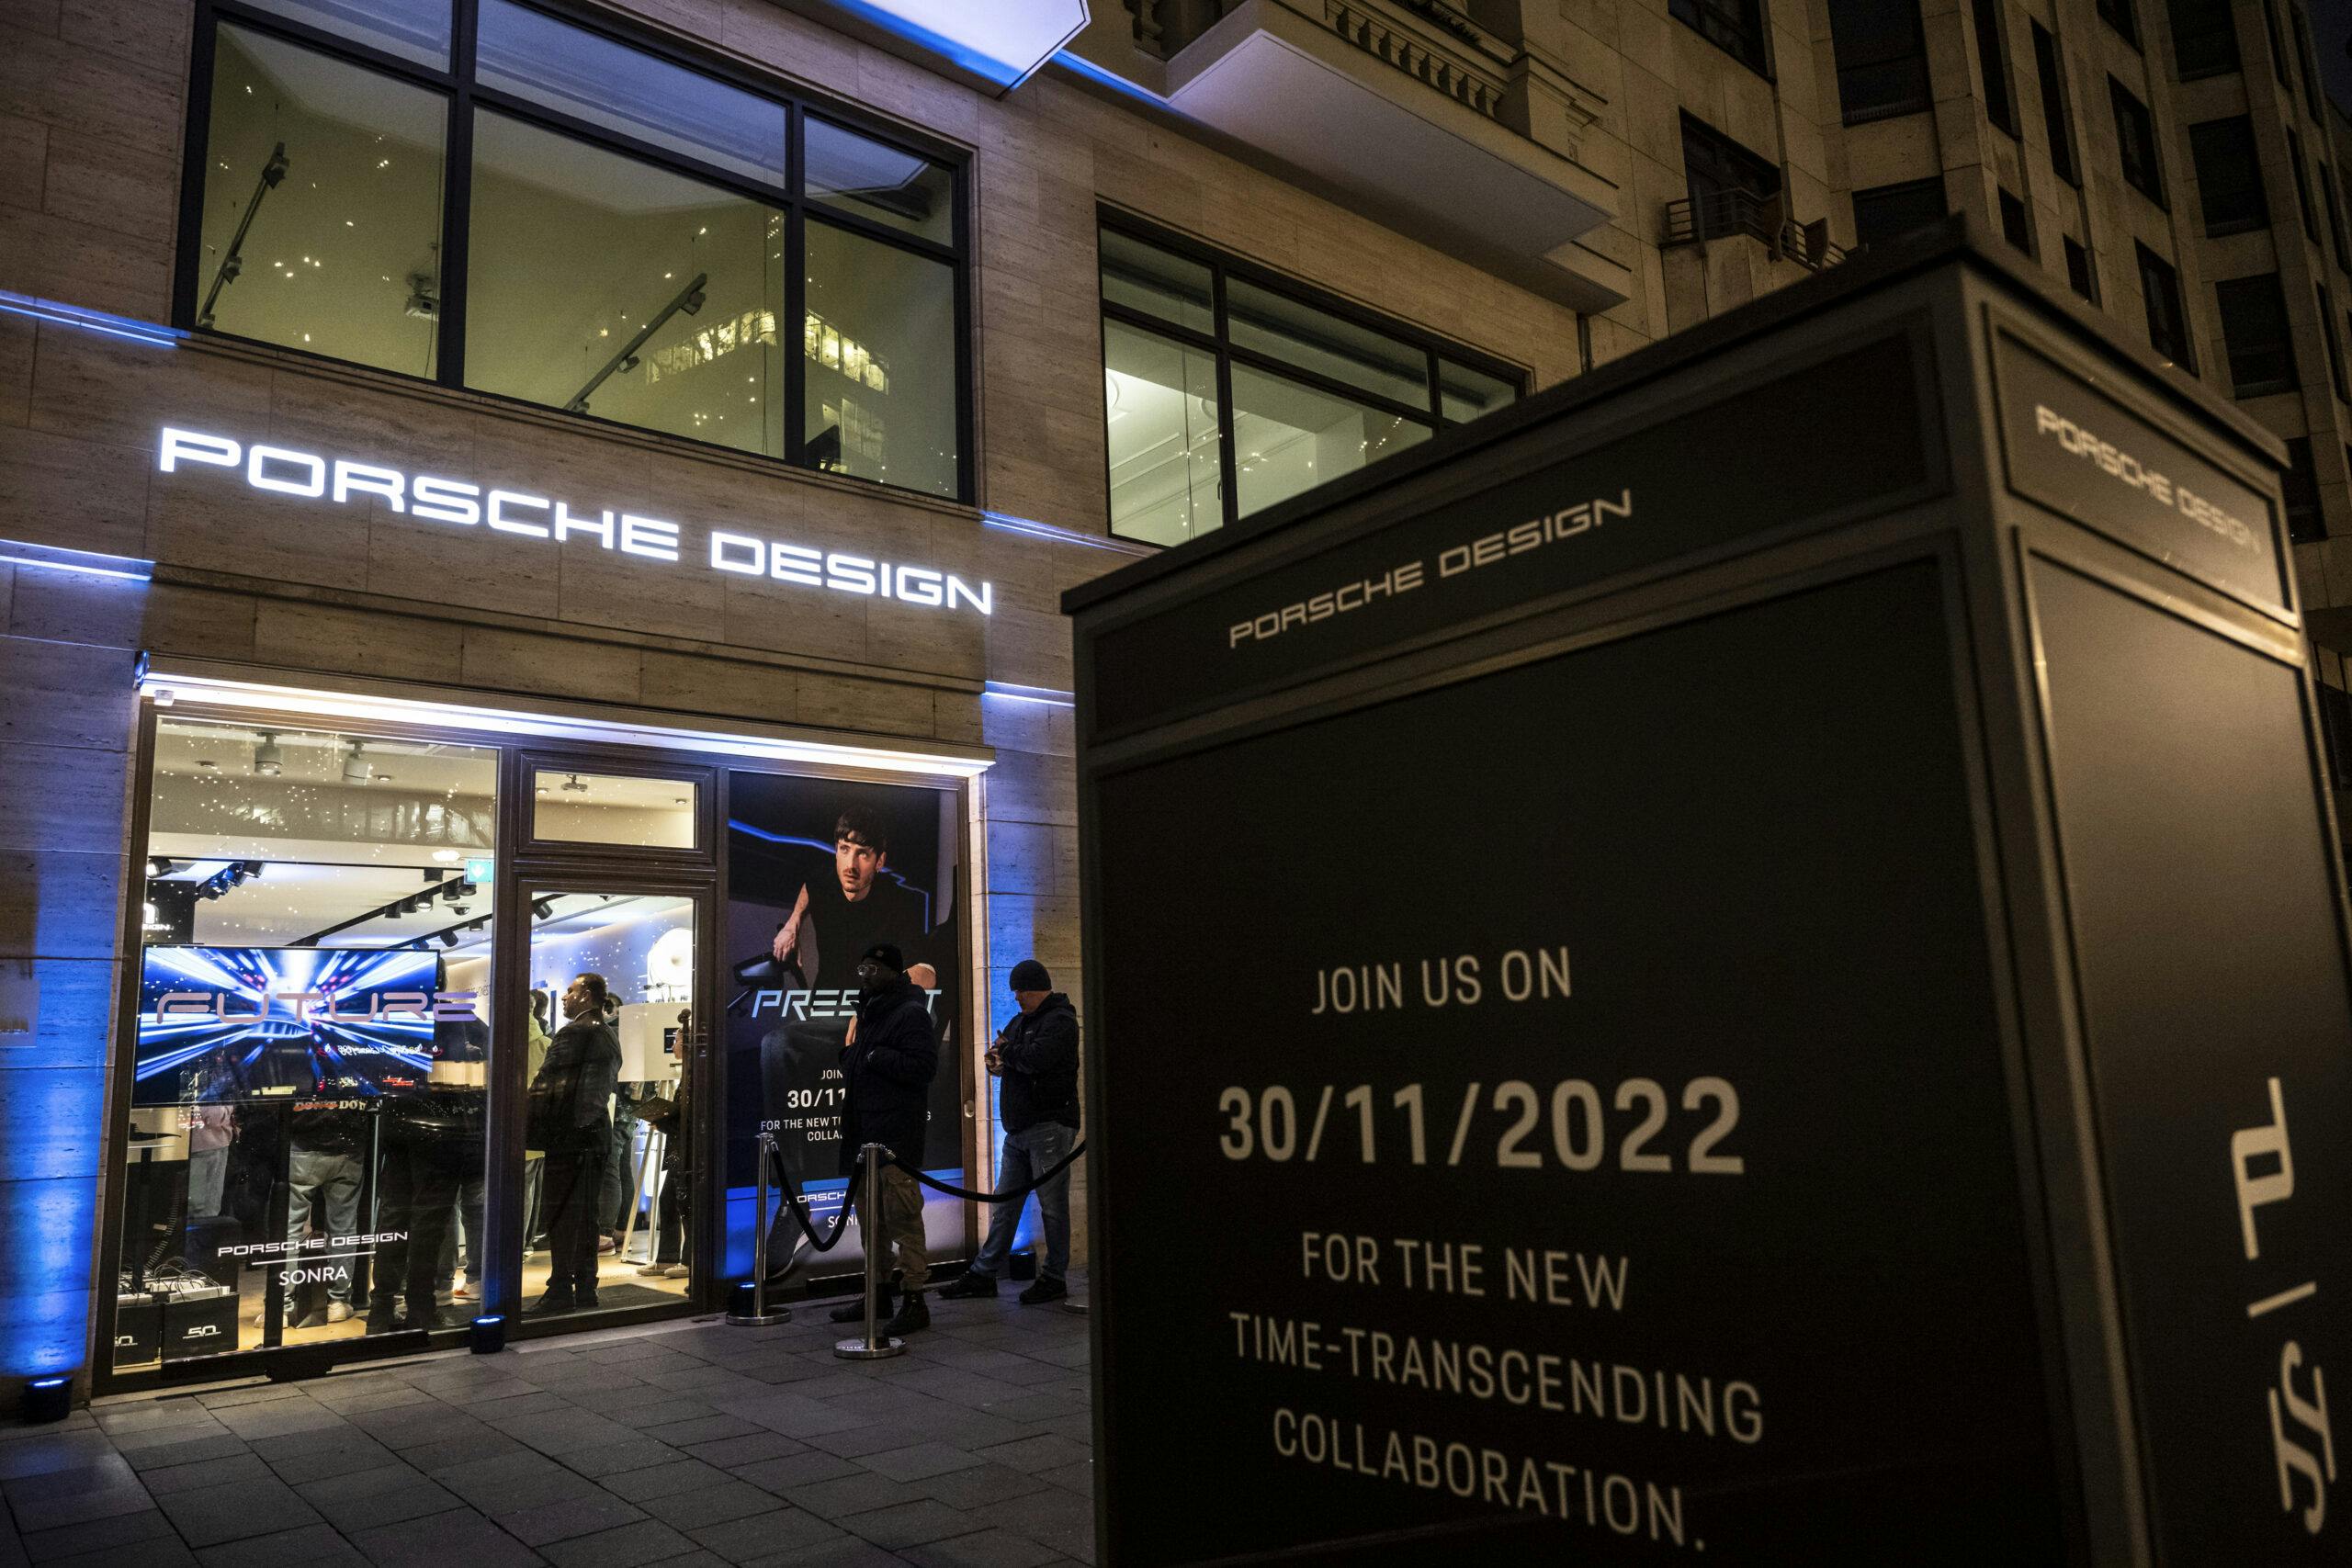 Long Lines Form Outside Porsche Design Store for Launch of Porsche Design × SONRA Sneakers